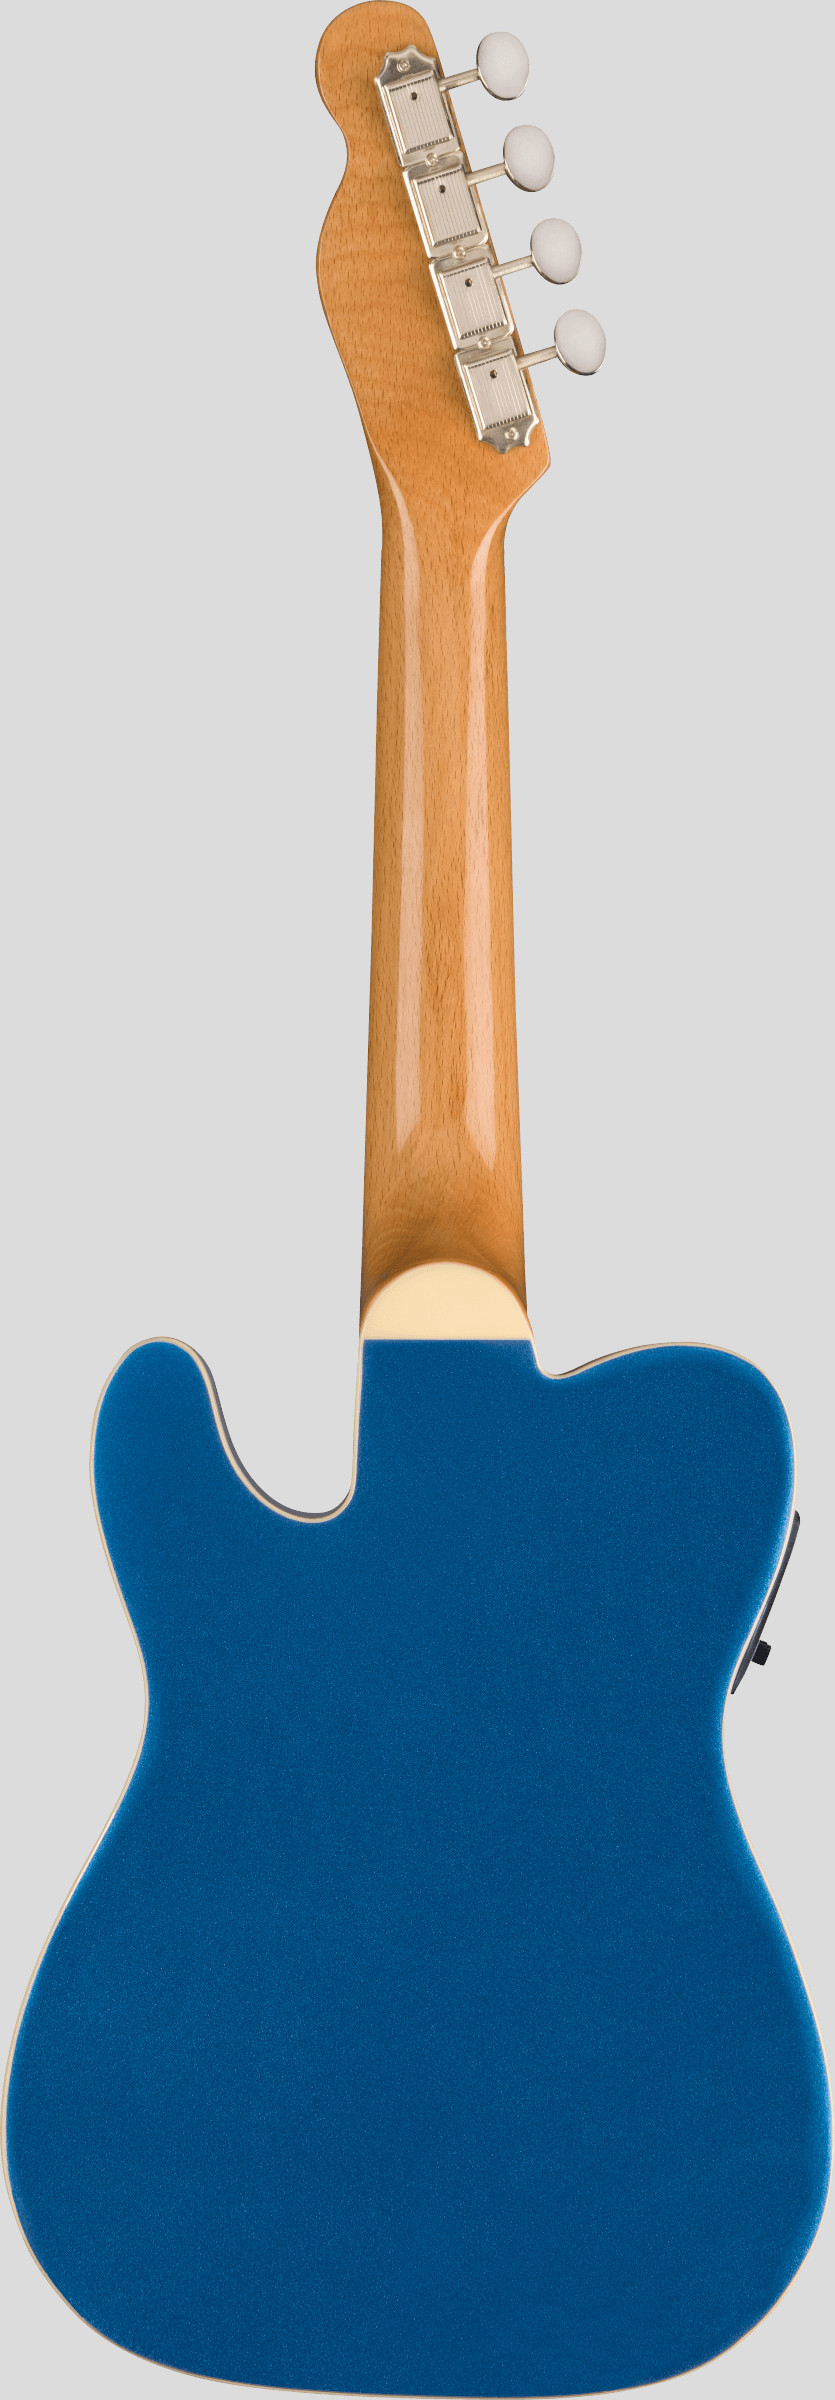 Fender Fullerton Telecaster Concert Ukulele Lake Placid Blue 2